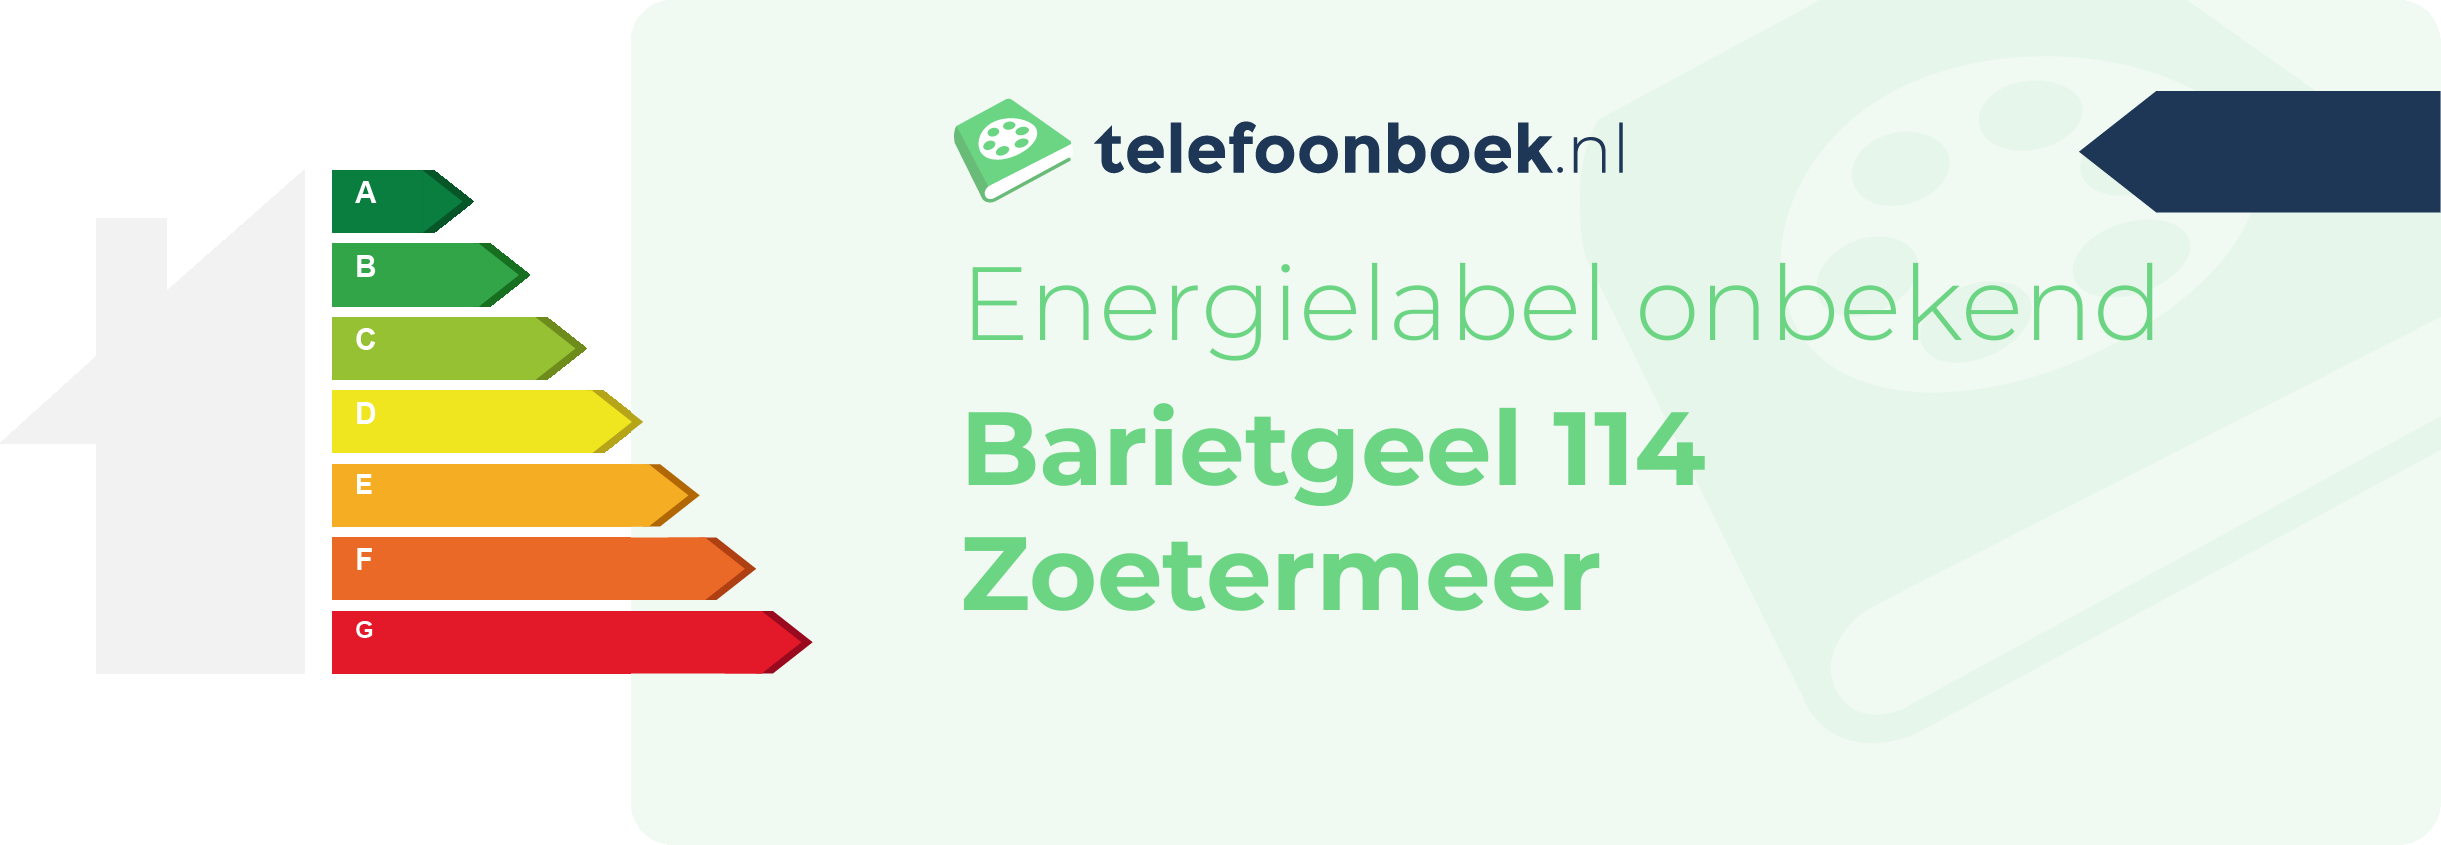 Energielabel Barietgeel 114 Zoetermeer